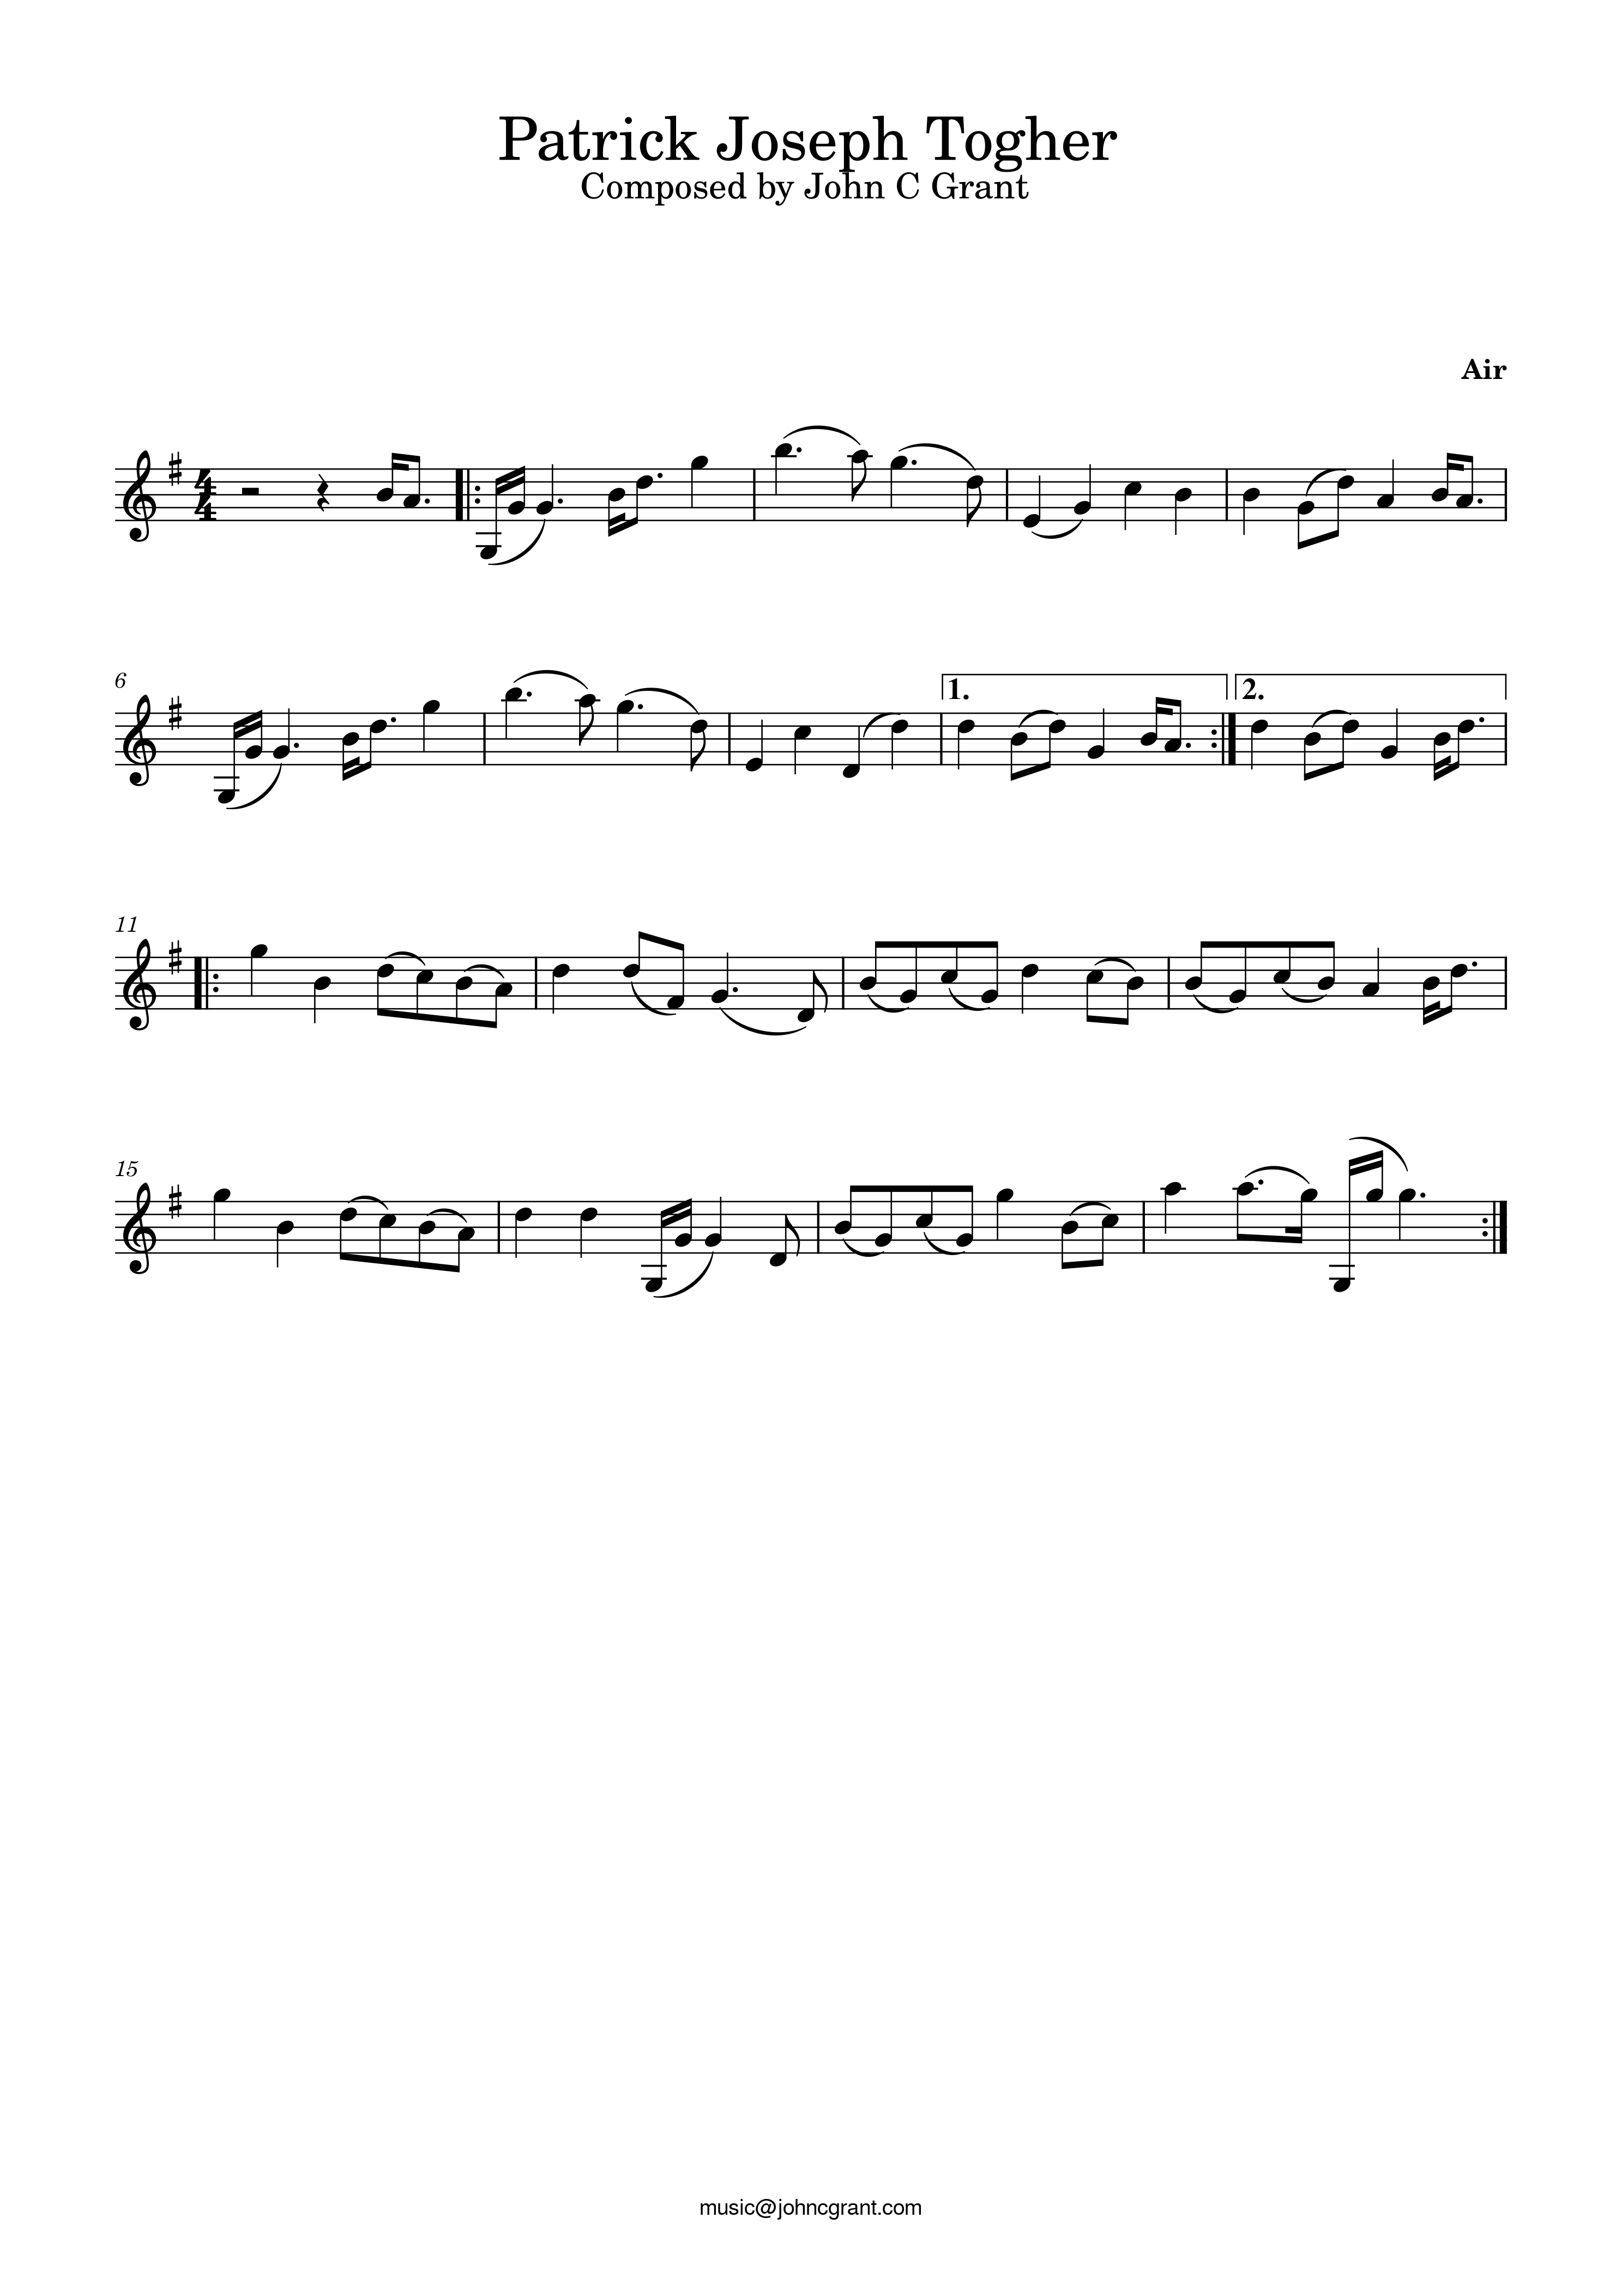 Patrick Joseph Togher - Composed by John C Grant (https://johncgrant.com). Traditional composer from Kilmarnock, Ayrshire, Scotland.